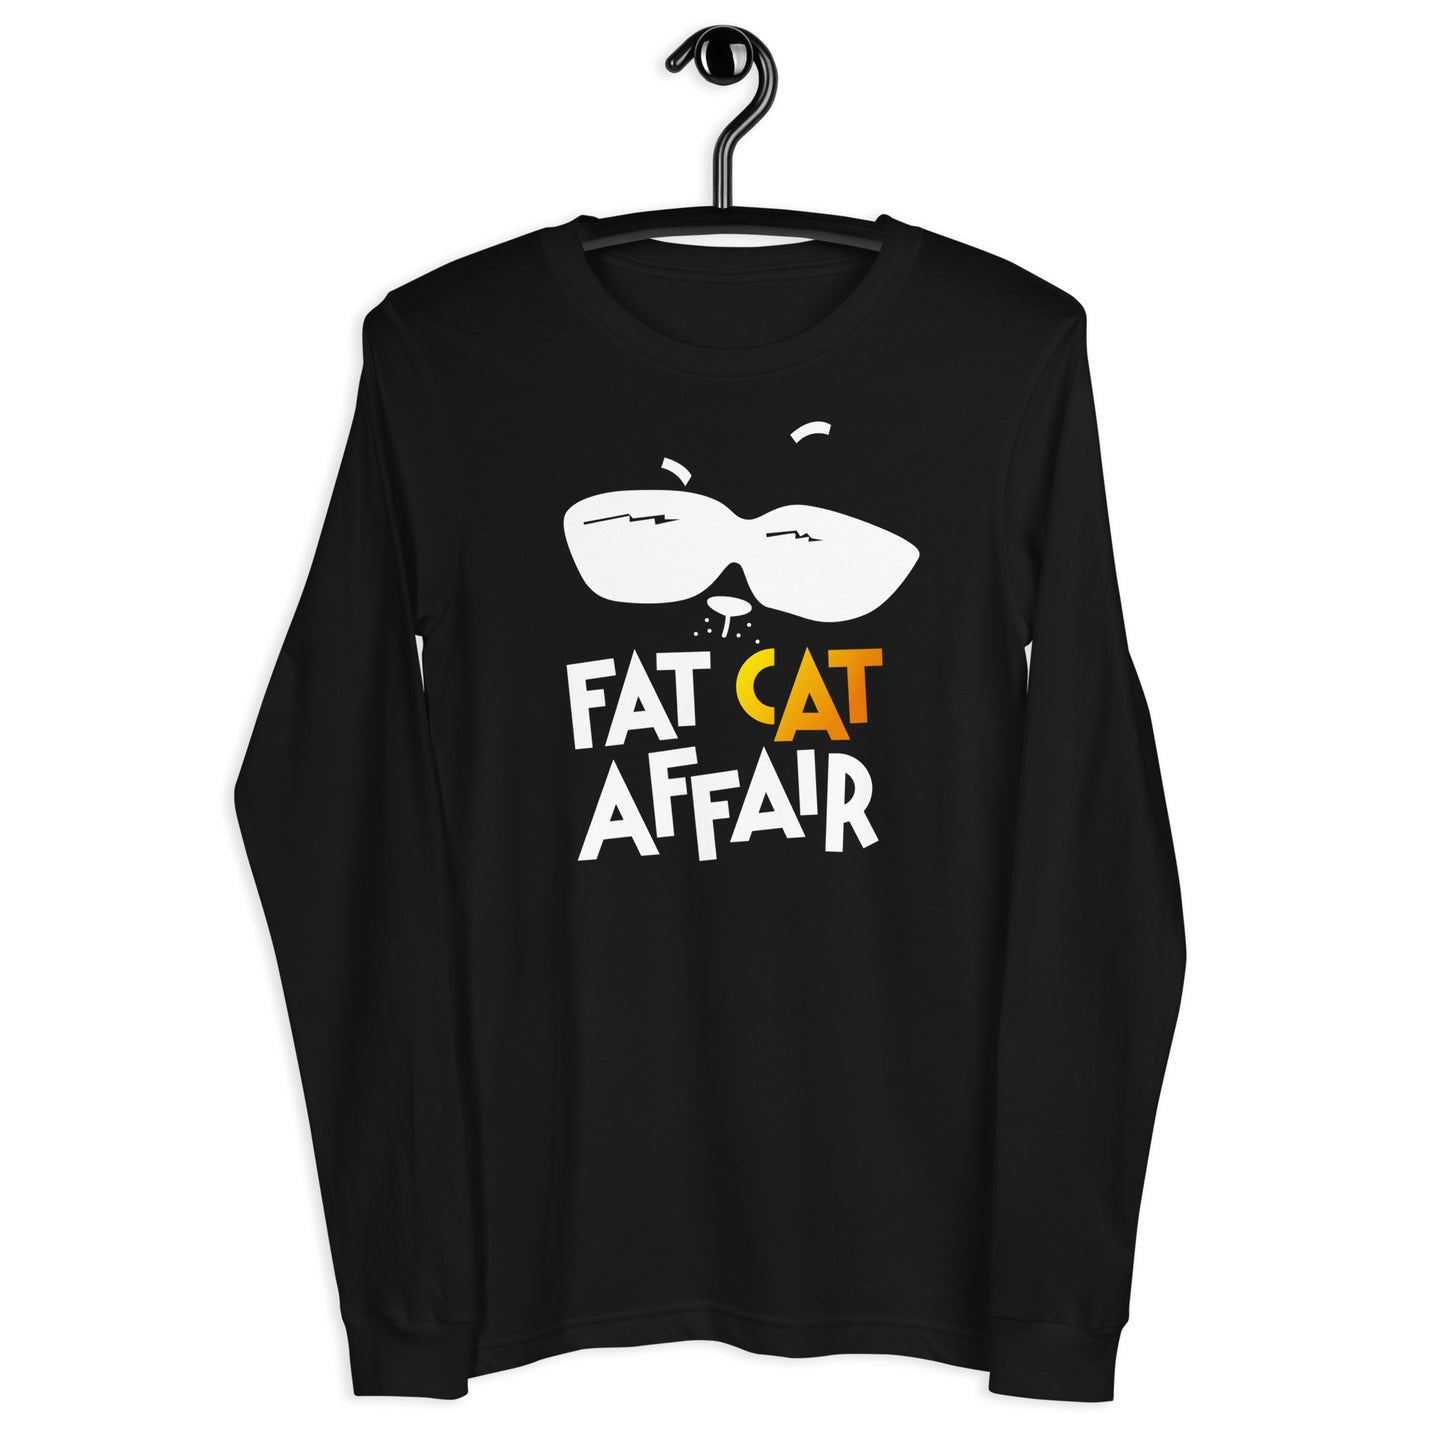 Long Sleeve Tee "Fat Cat Affair"